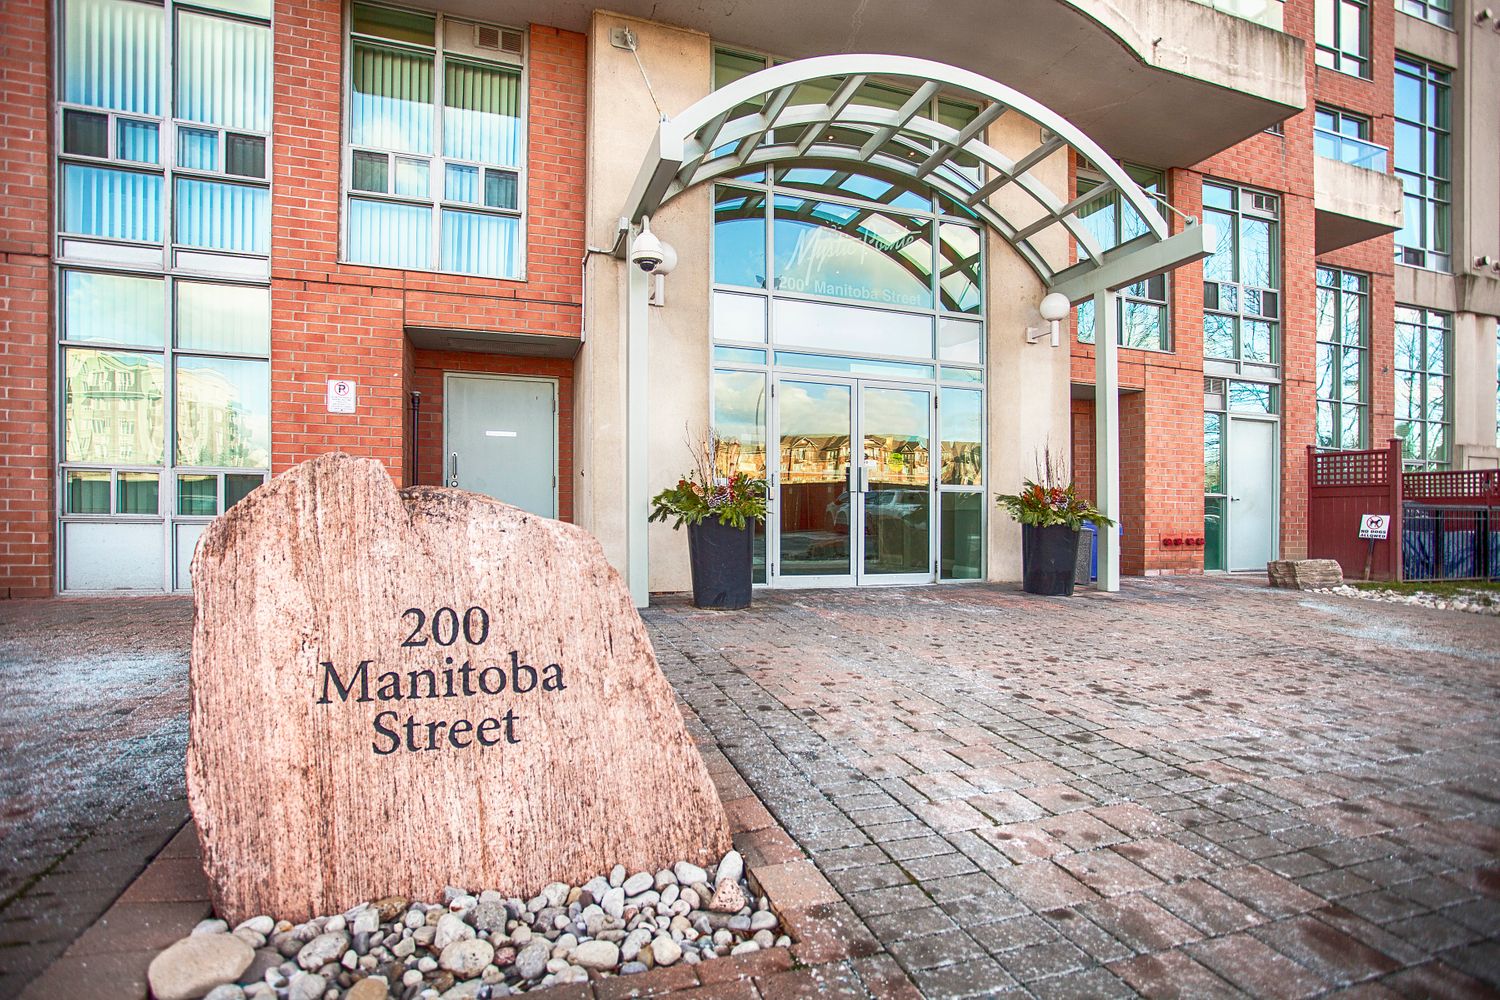 200 Manitoba Street. Mystic Pointe - Skylofts II is located in  Etobicoke, Toronto - image #2 of 3